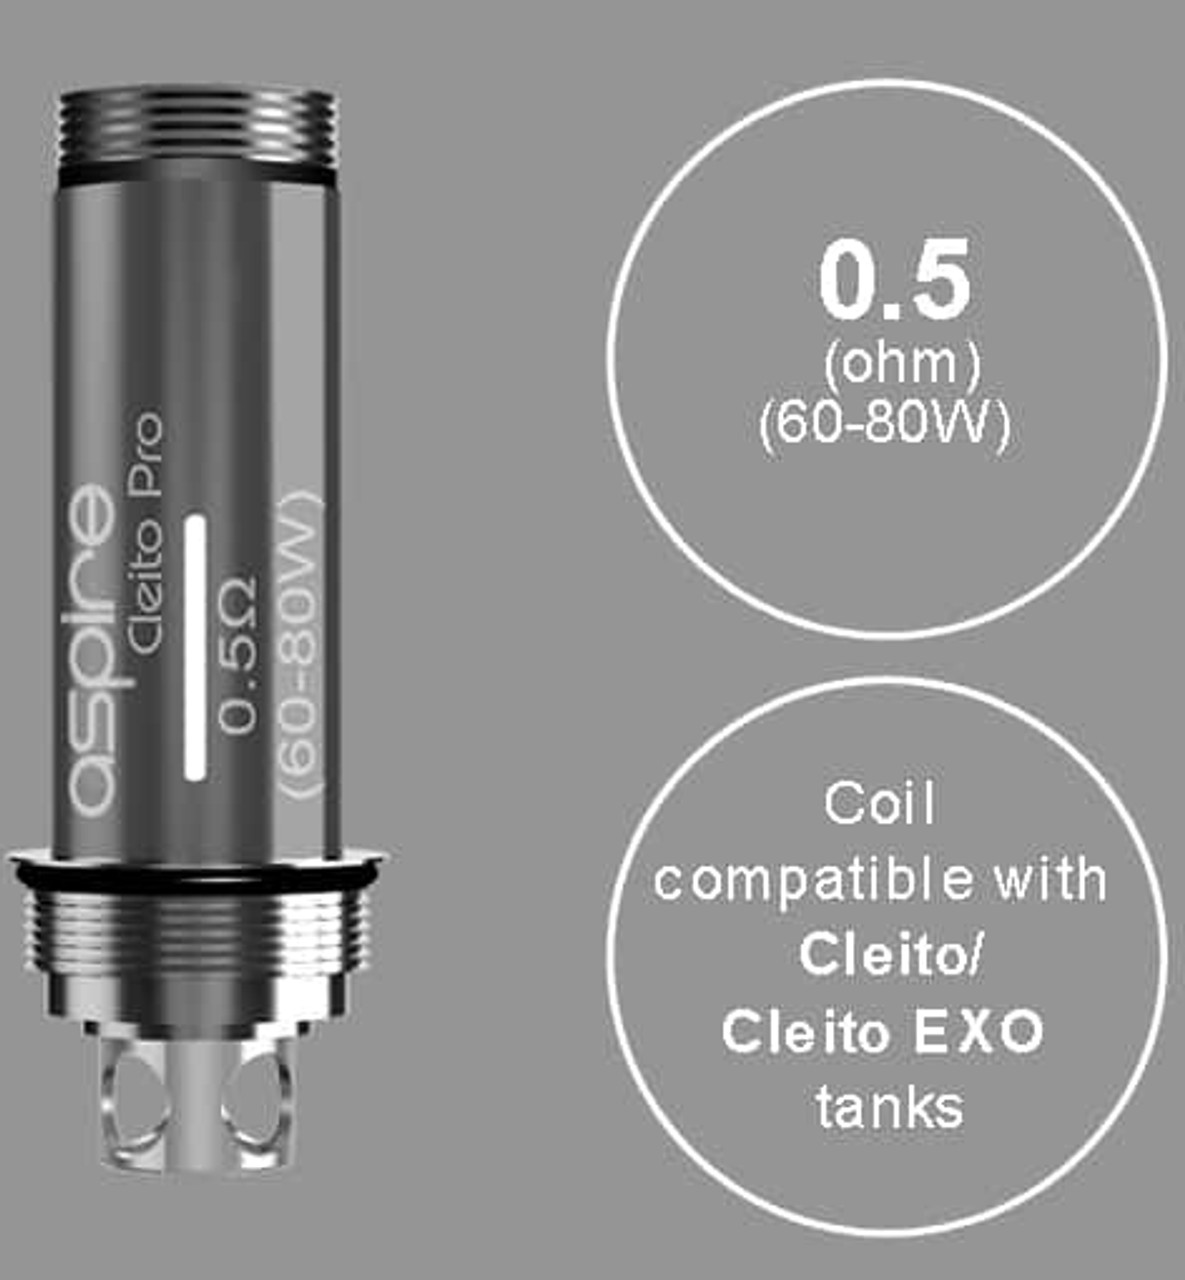 Aspire Cleito Pro. UK 0.5 Ohm Pro coils